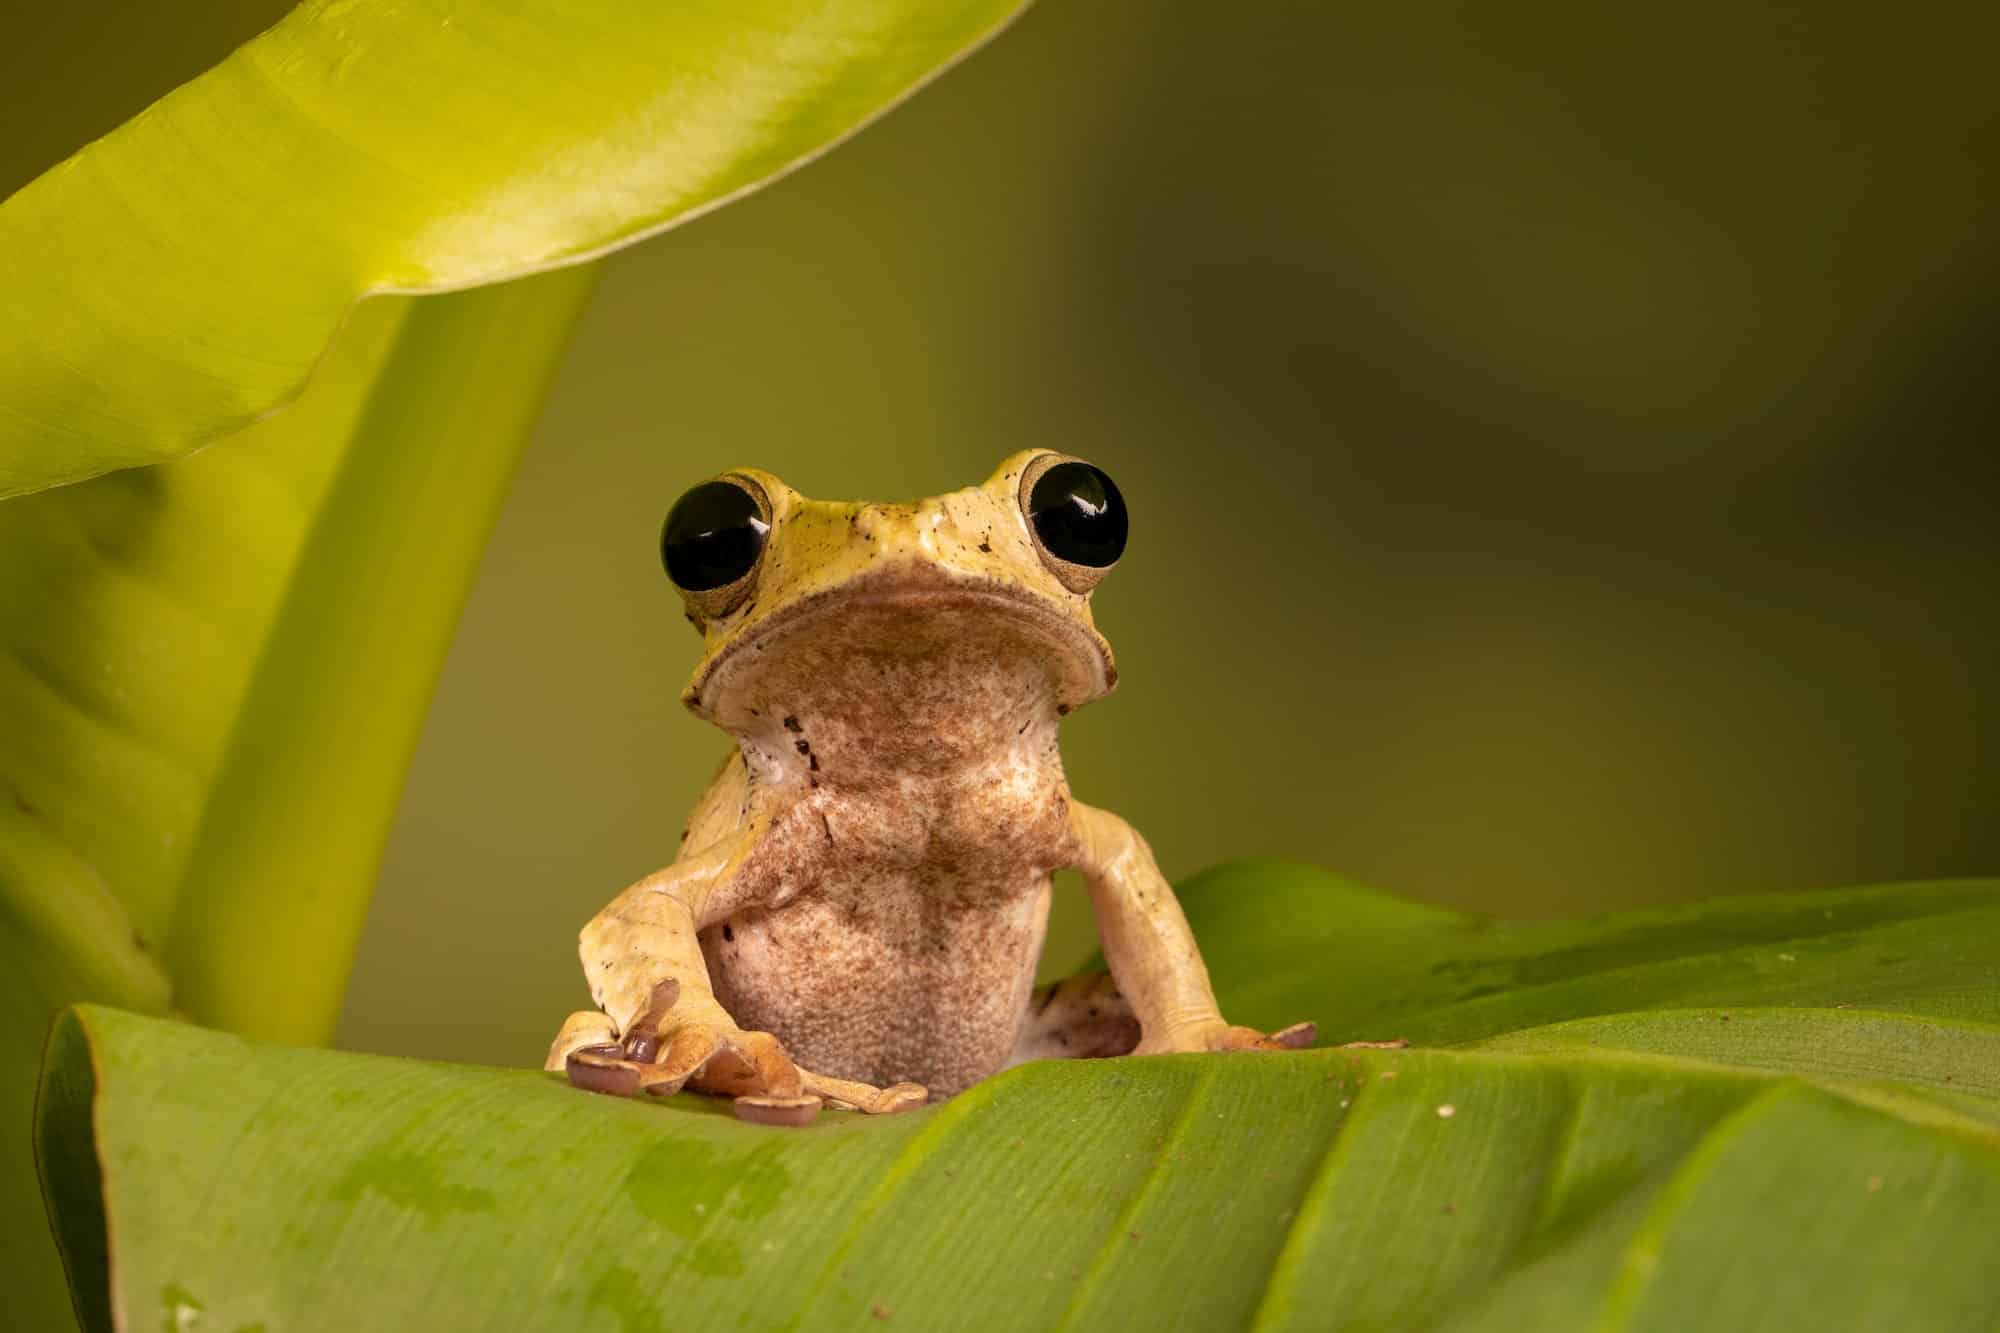 Close-up shot of a Cuban tree frog (Osteopilus septentrionalis) on a leaf on blurred background